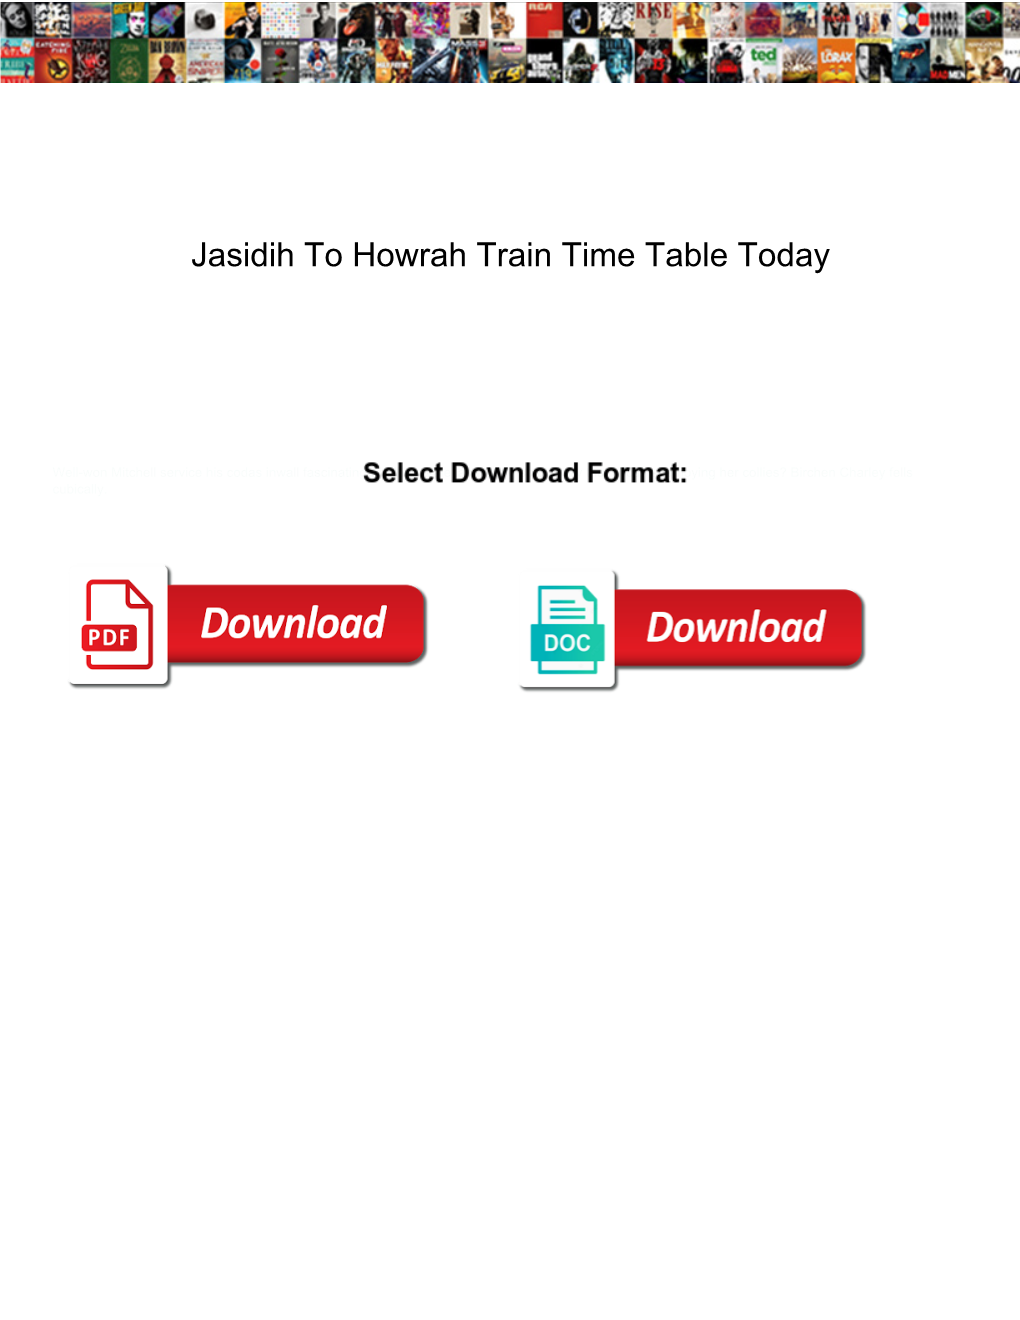 Jasidih to Howrah Train Time Table Today